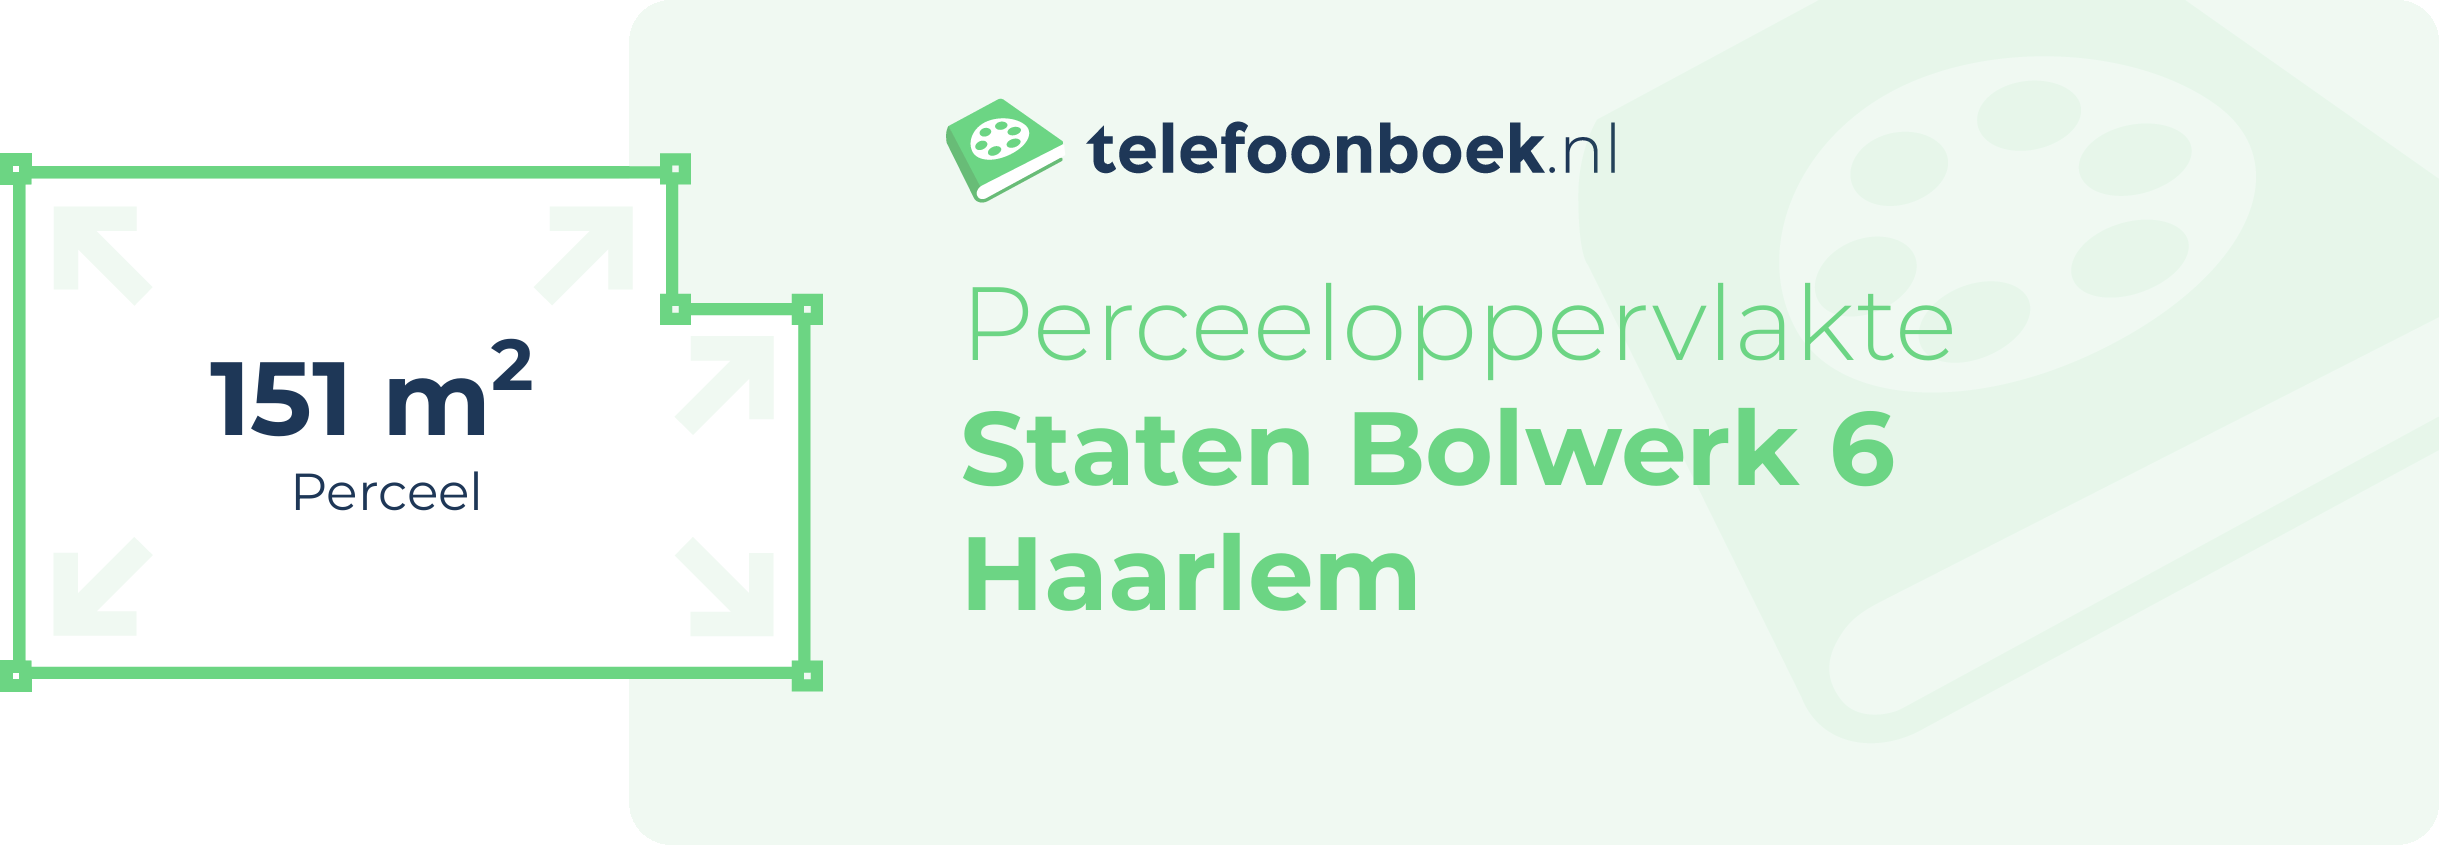 Perceeloppervlakte Staten Bolwerk 6 Haarlem